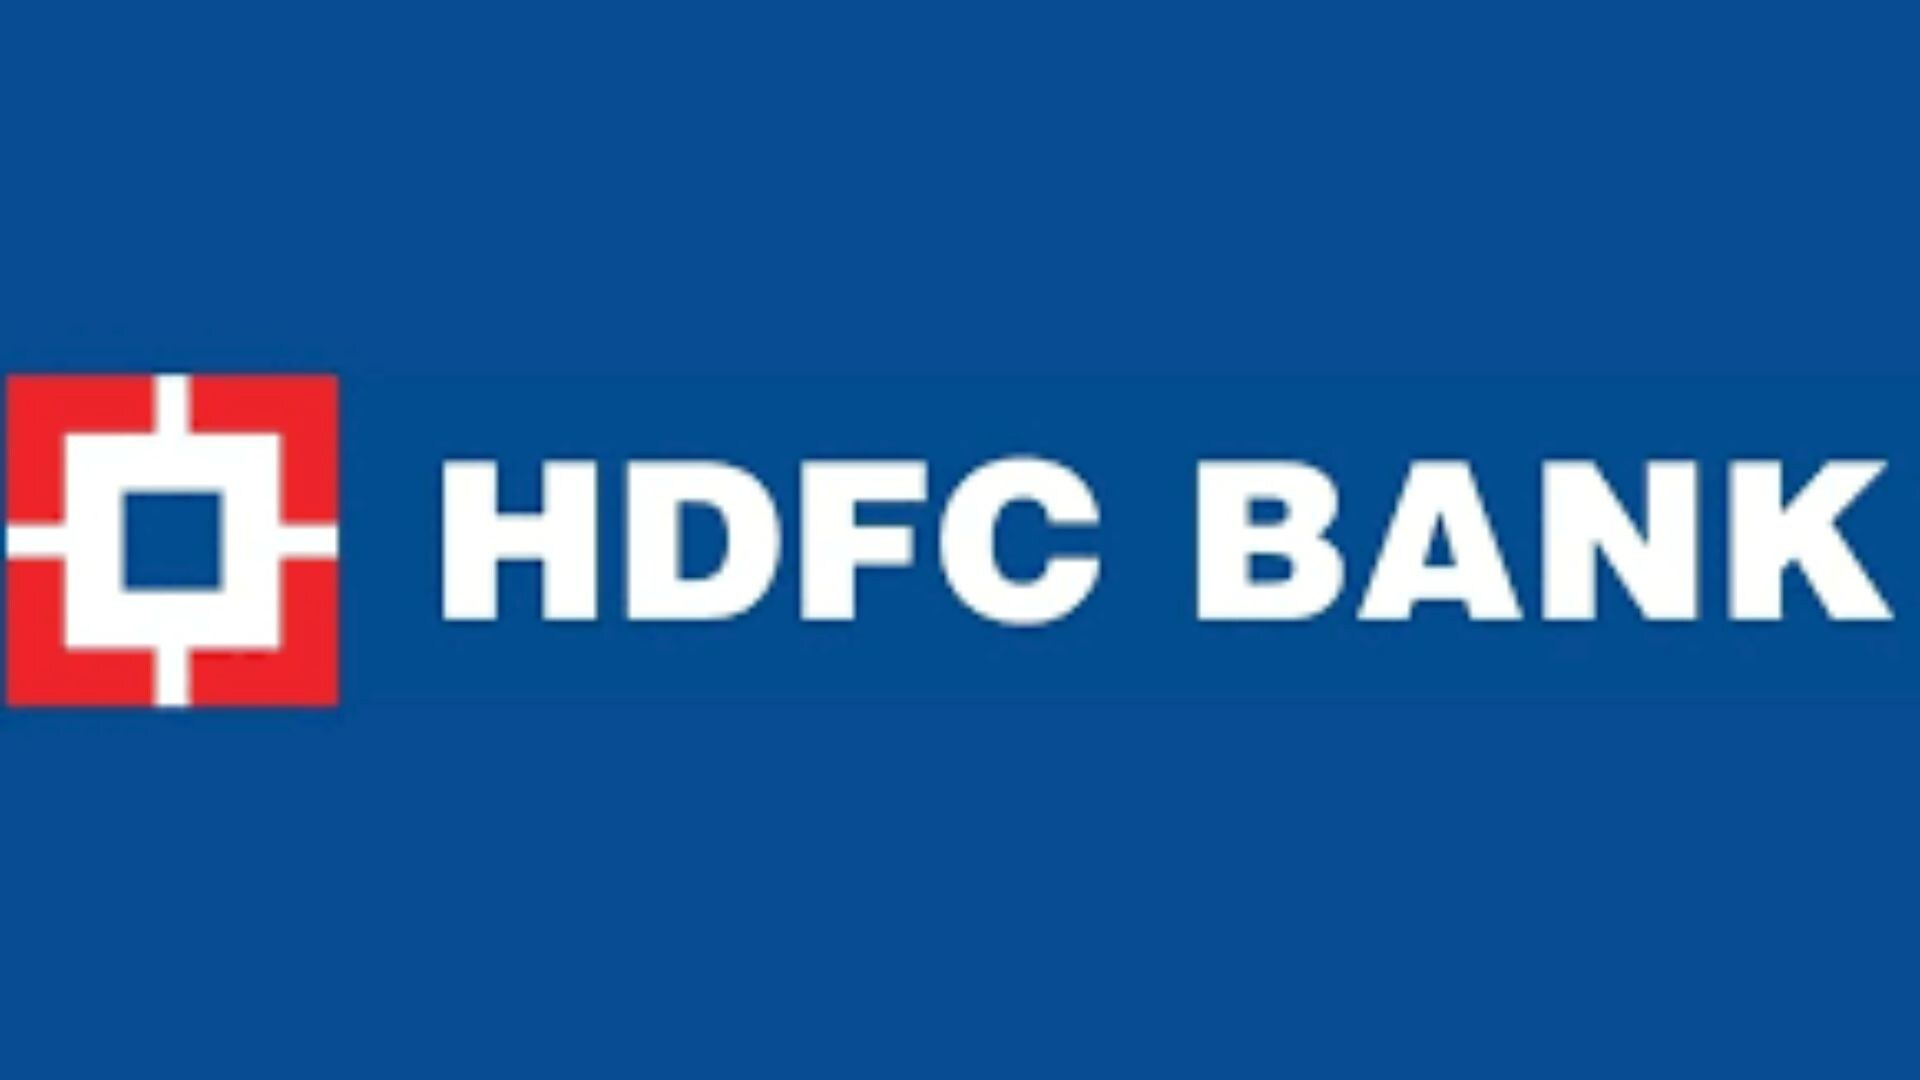 HDFC Bank Greenlights Rs 60,000 Crore Fundraising Through Debt Instruments